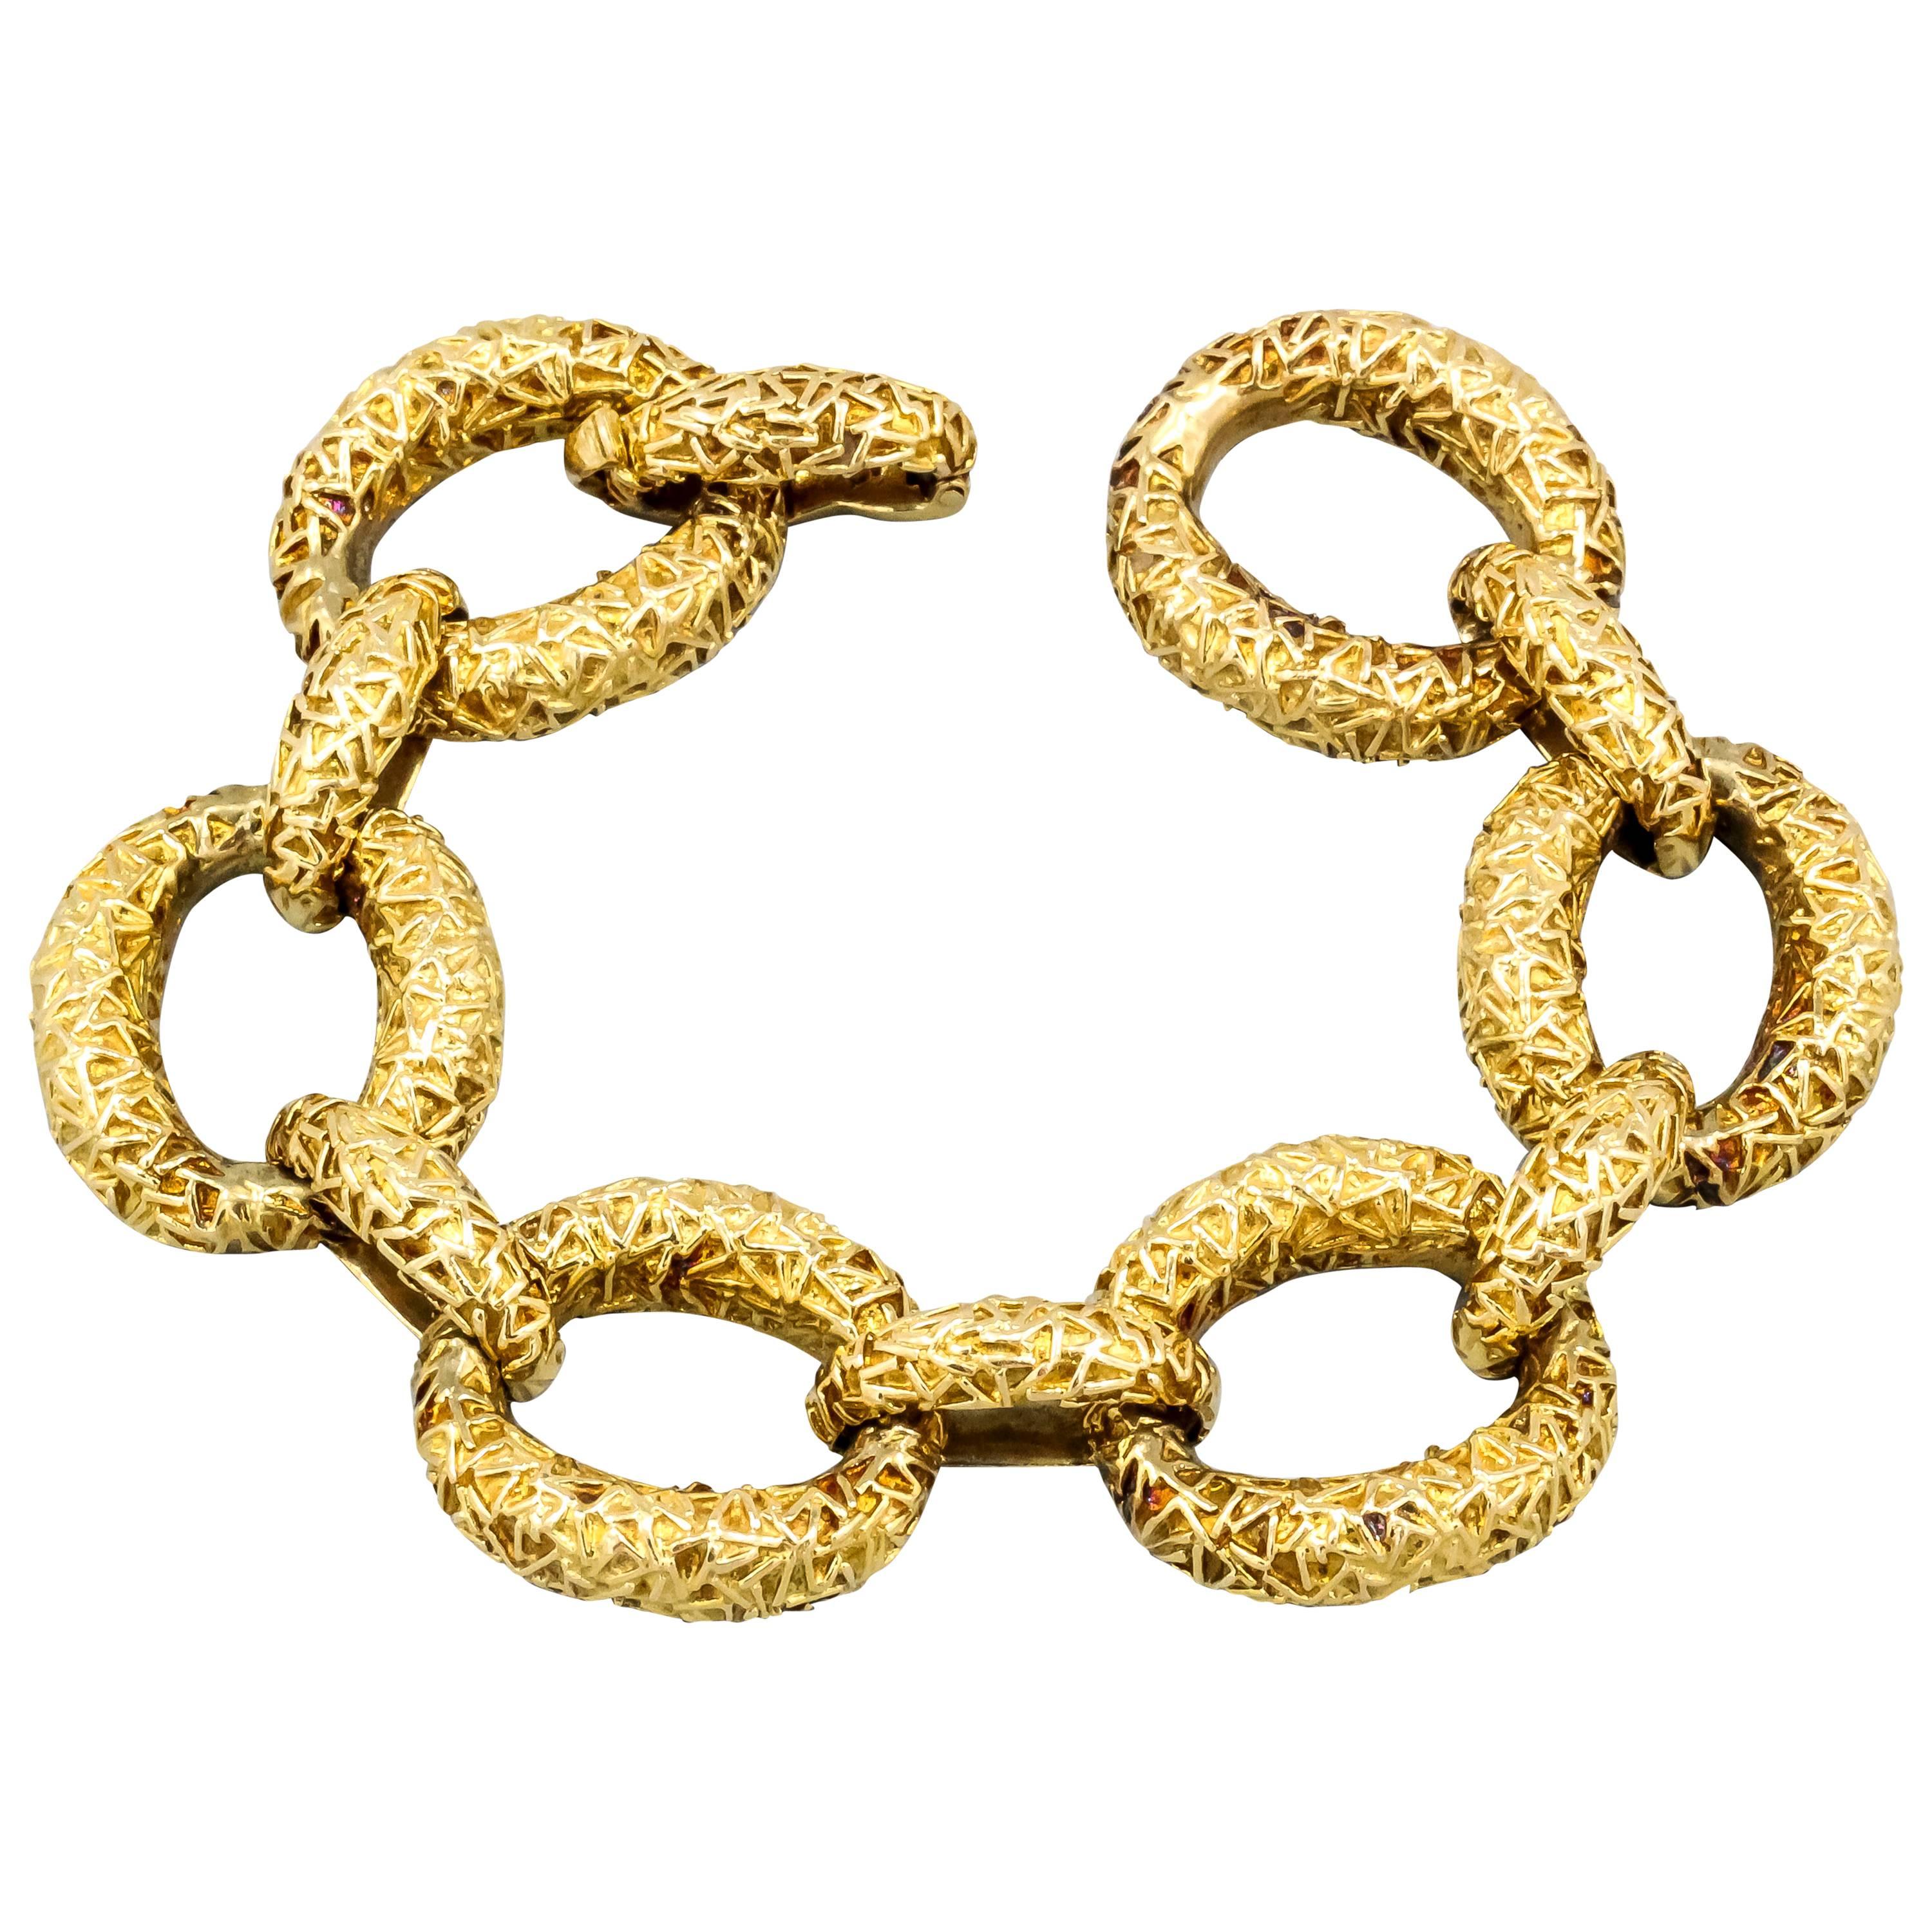 Van Cleef & Arpels Link Gold Bracelet